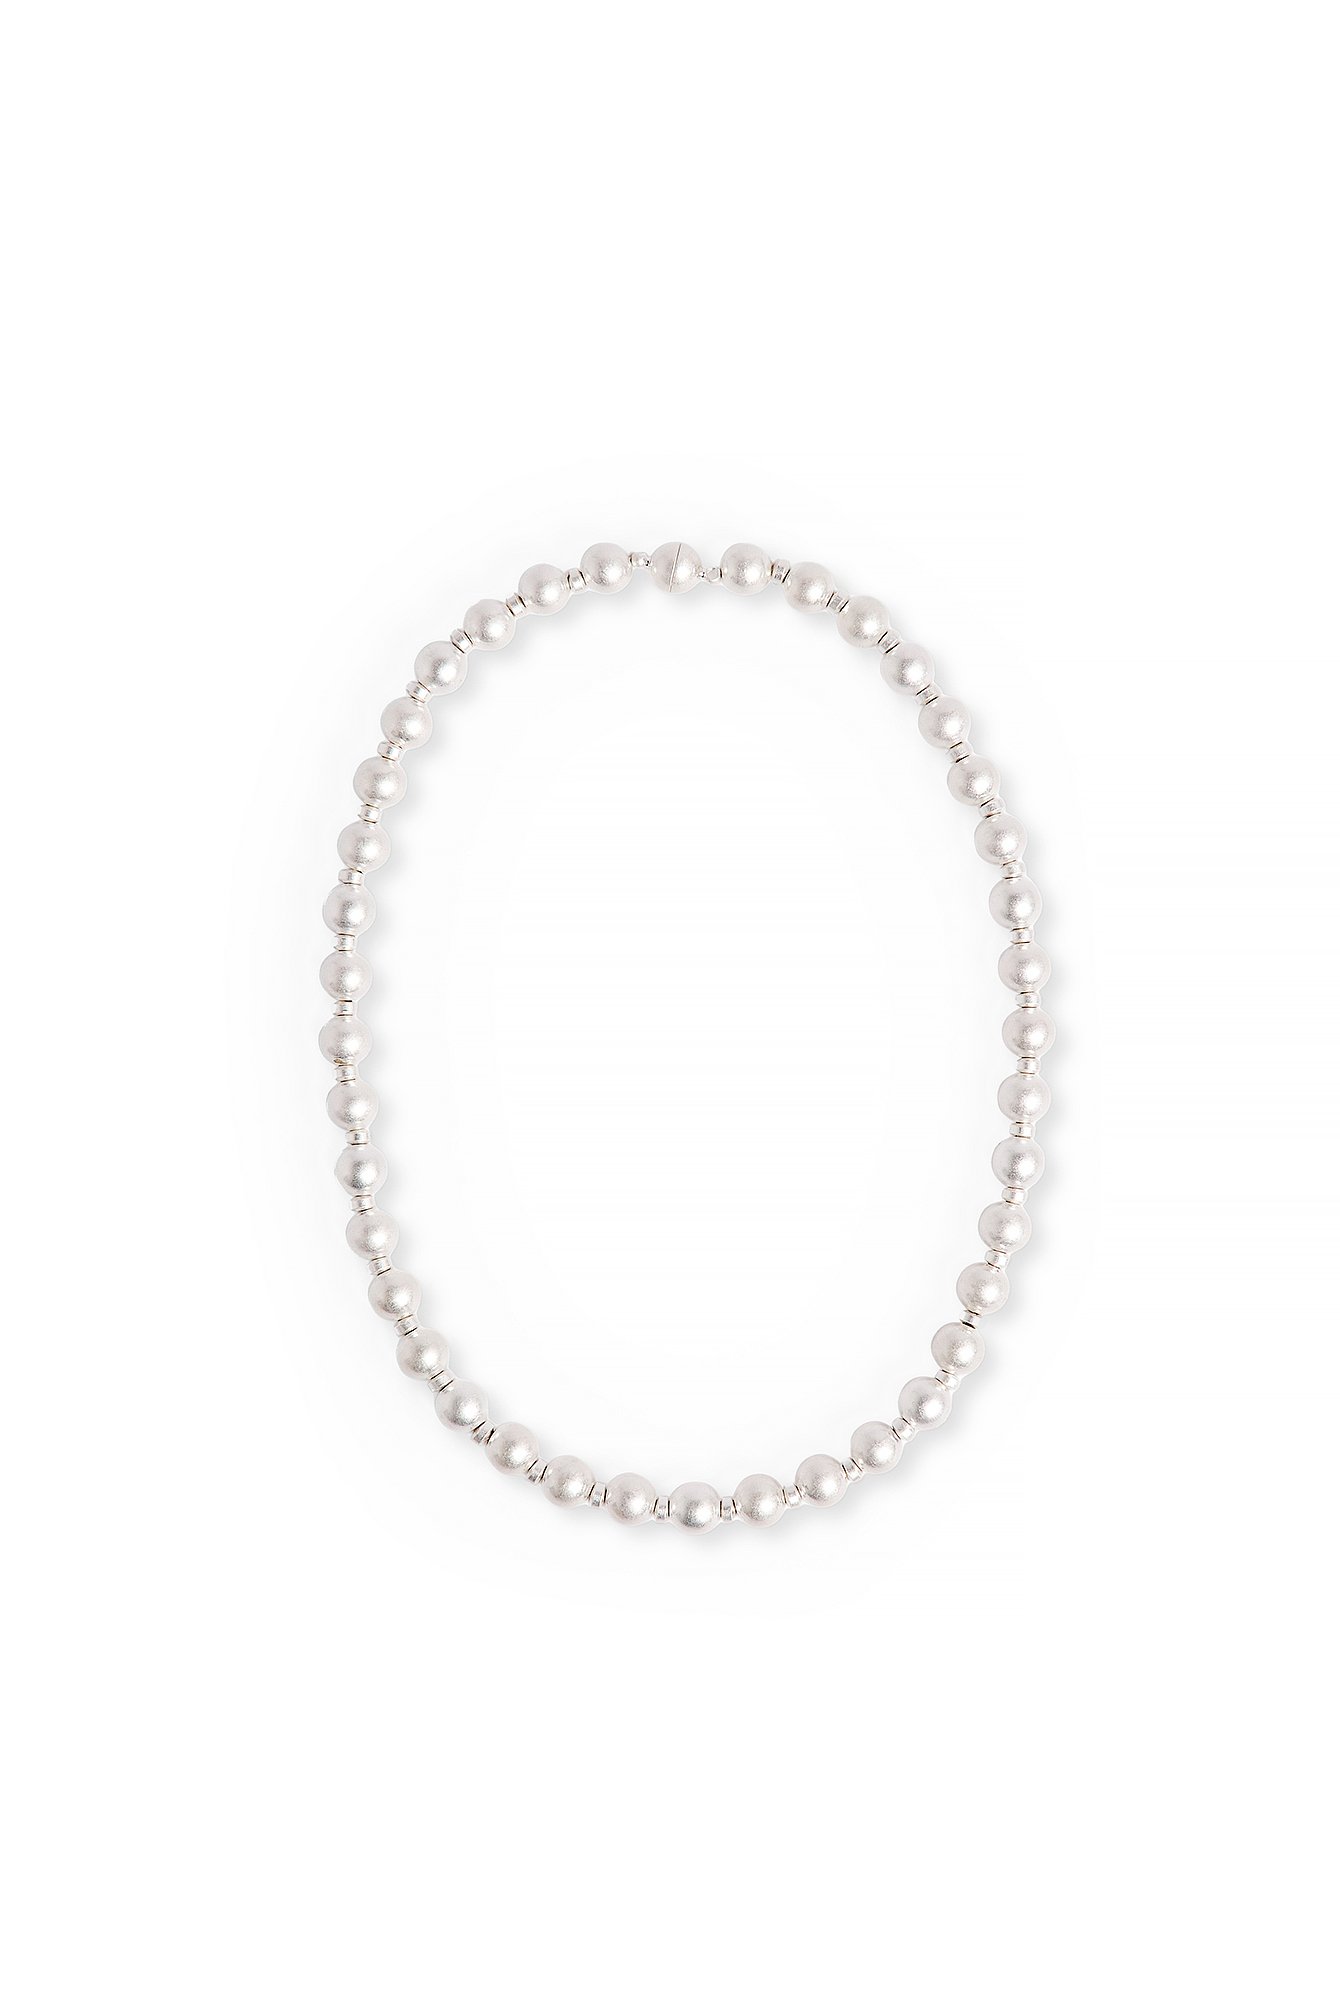 Silver Silver Colored Pearl Necklace